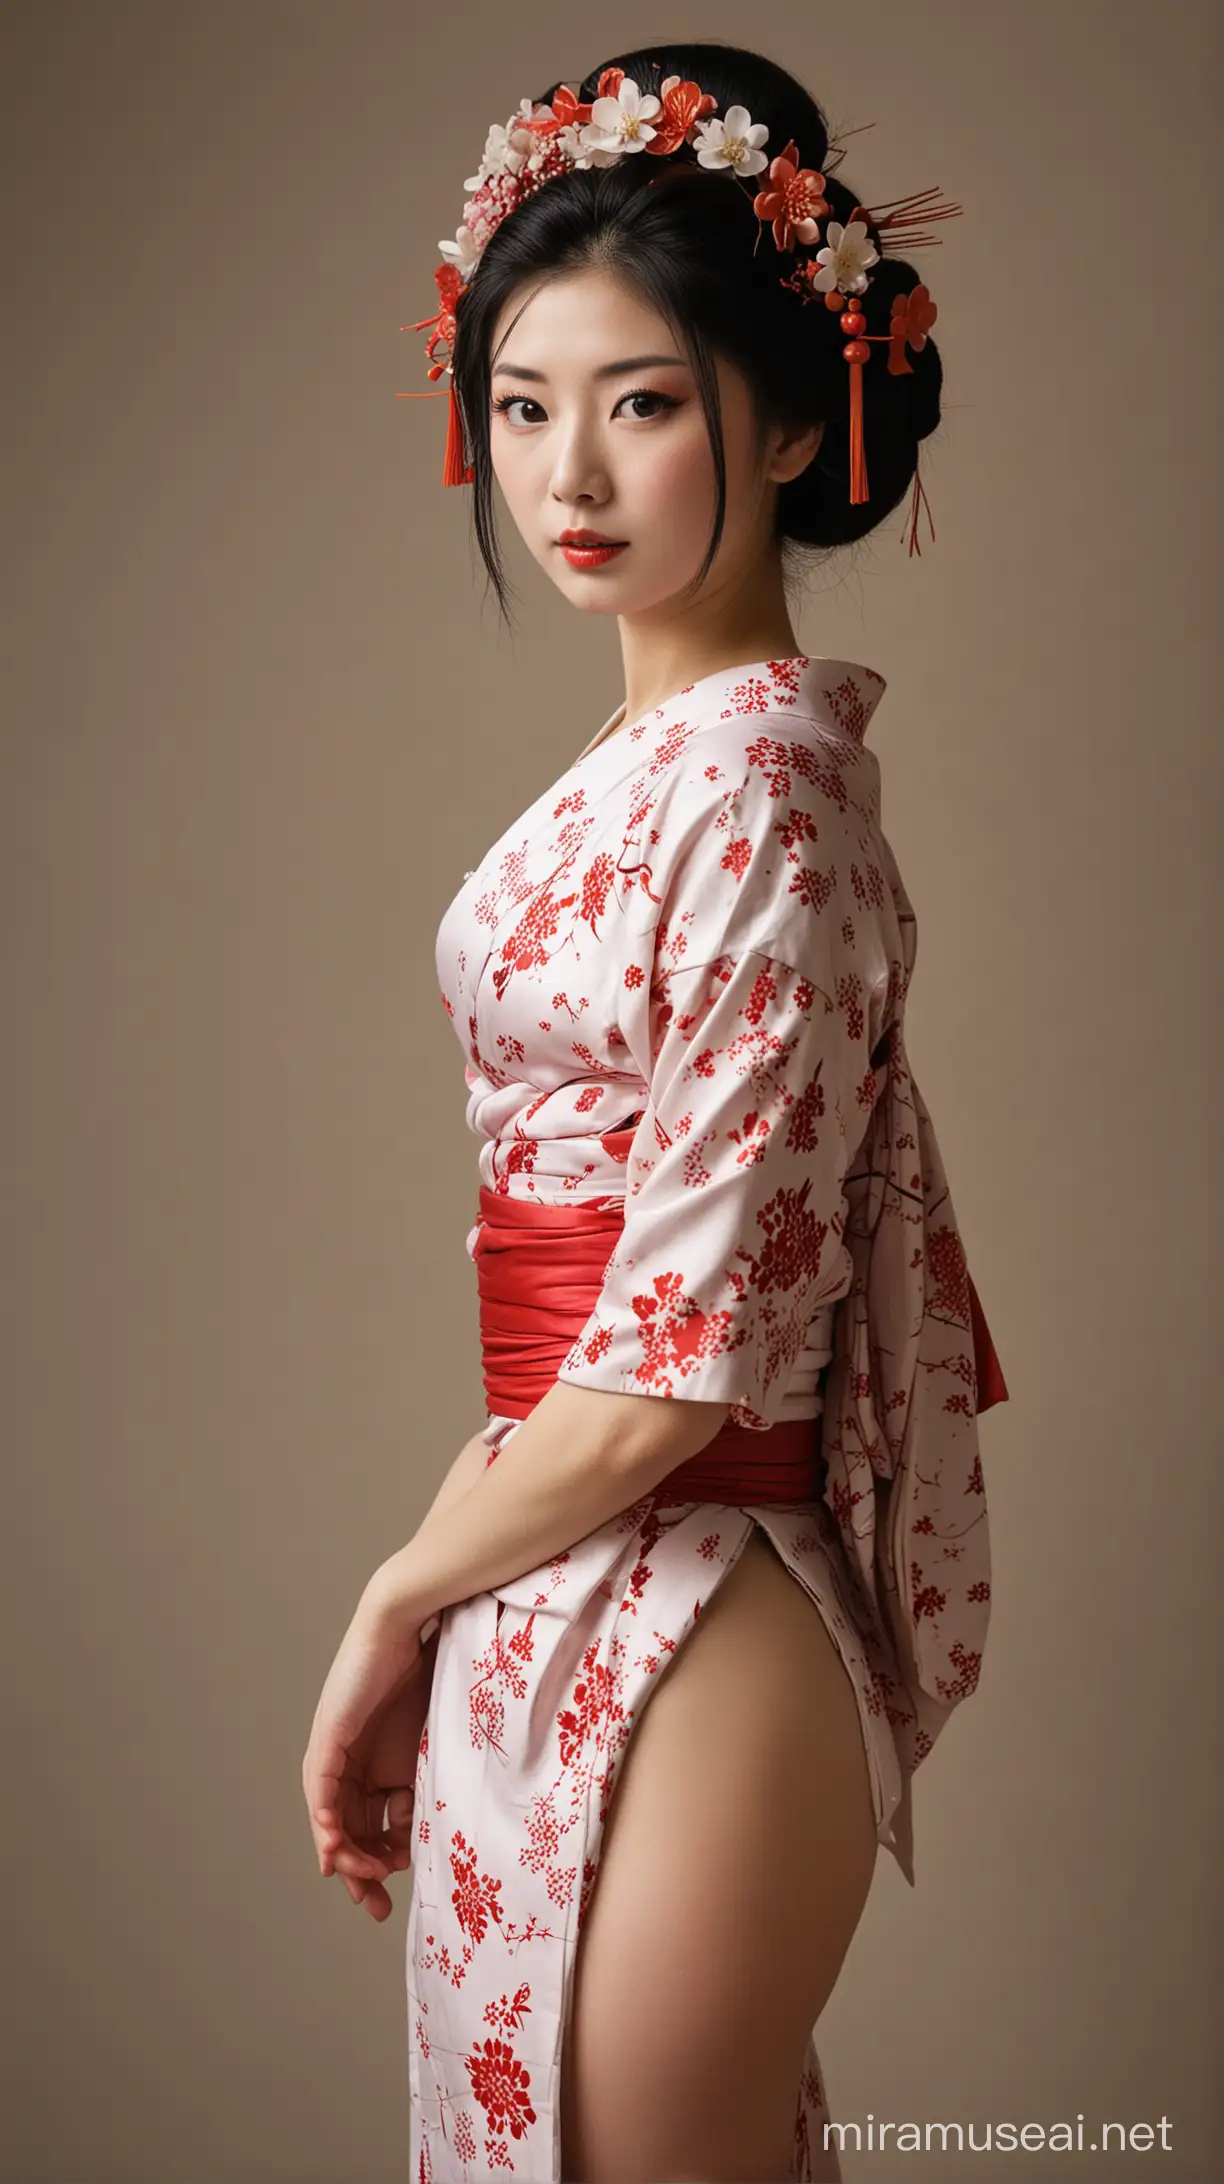 Geisha girl, less clothes